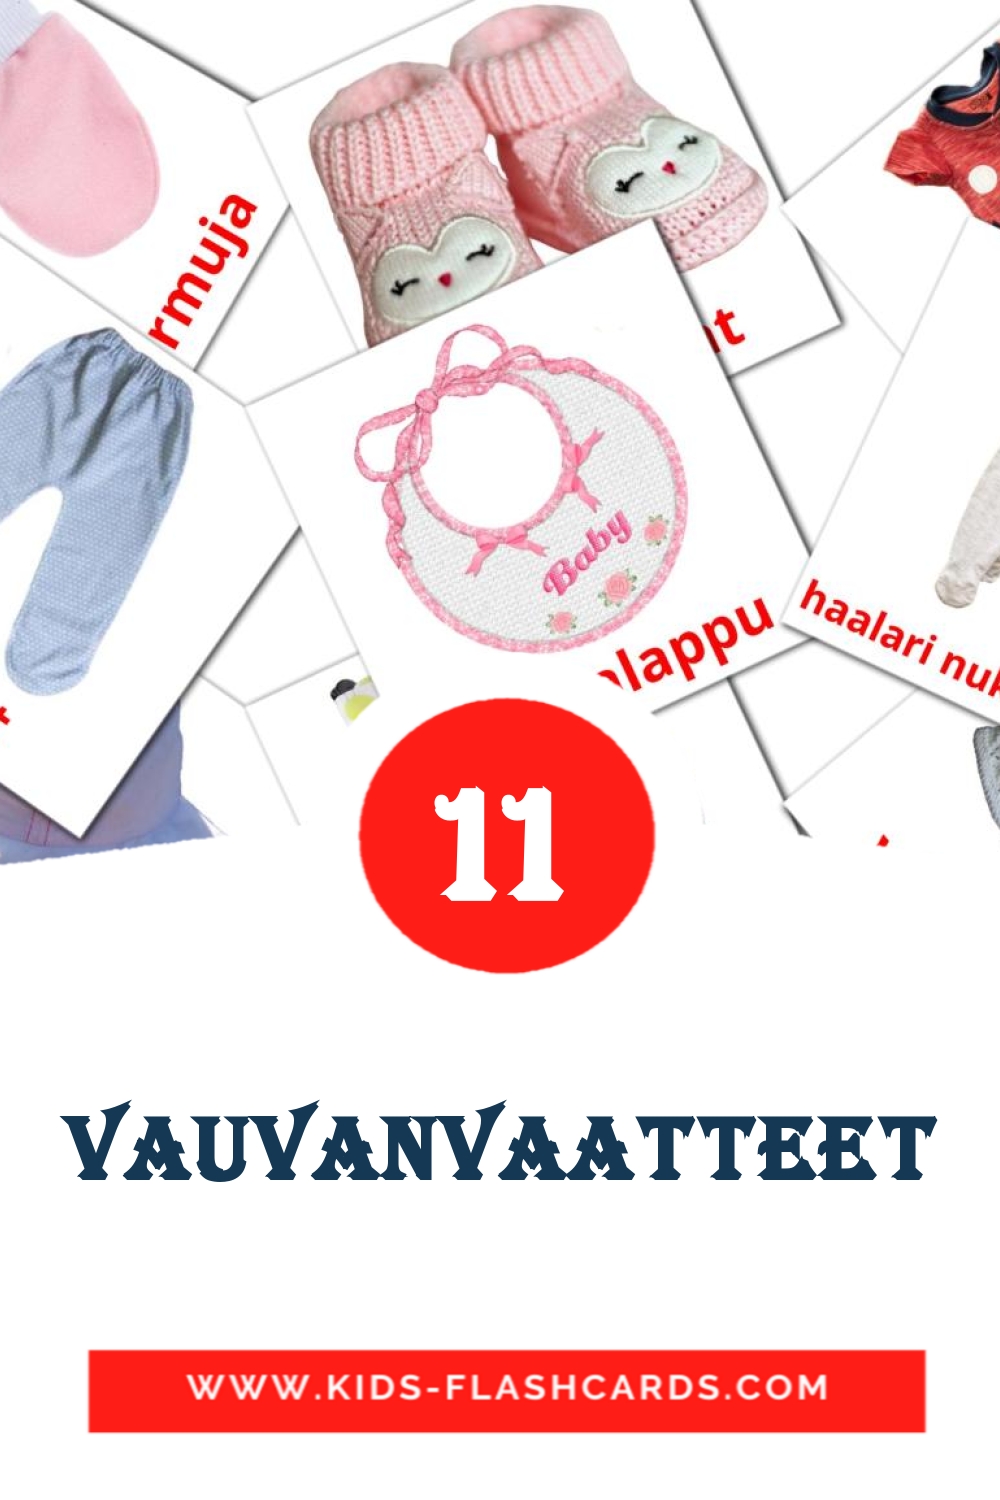 11 vauvanvaatteet Picture Cards for Kindergarden in finnish